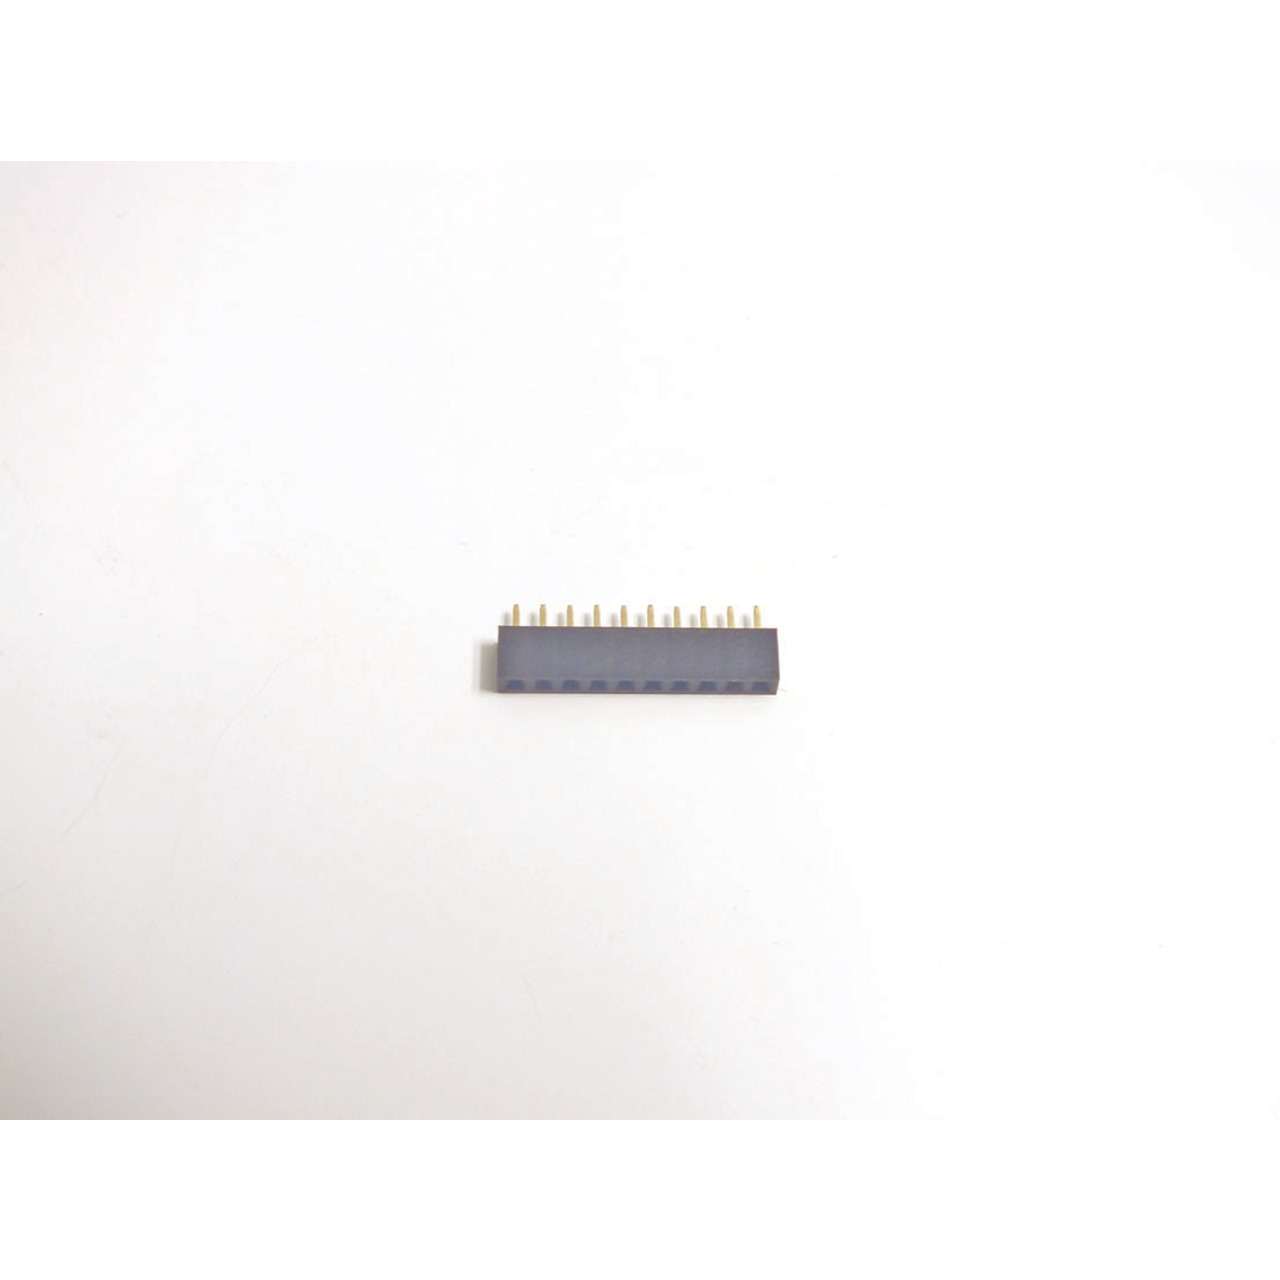 SMD-Buchsenleiste- 1x 10-polig- Körperhöhe 4-3 mm- gerade unter Komponenten